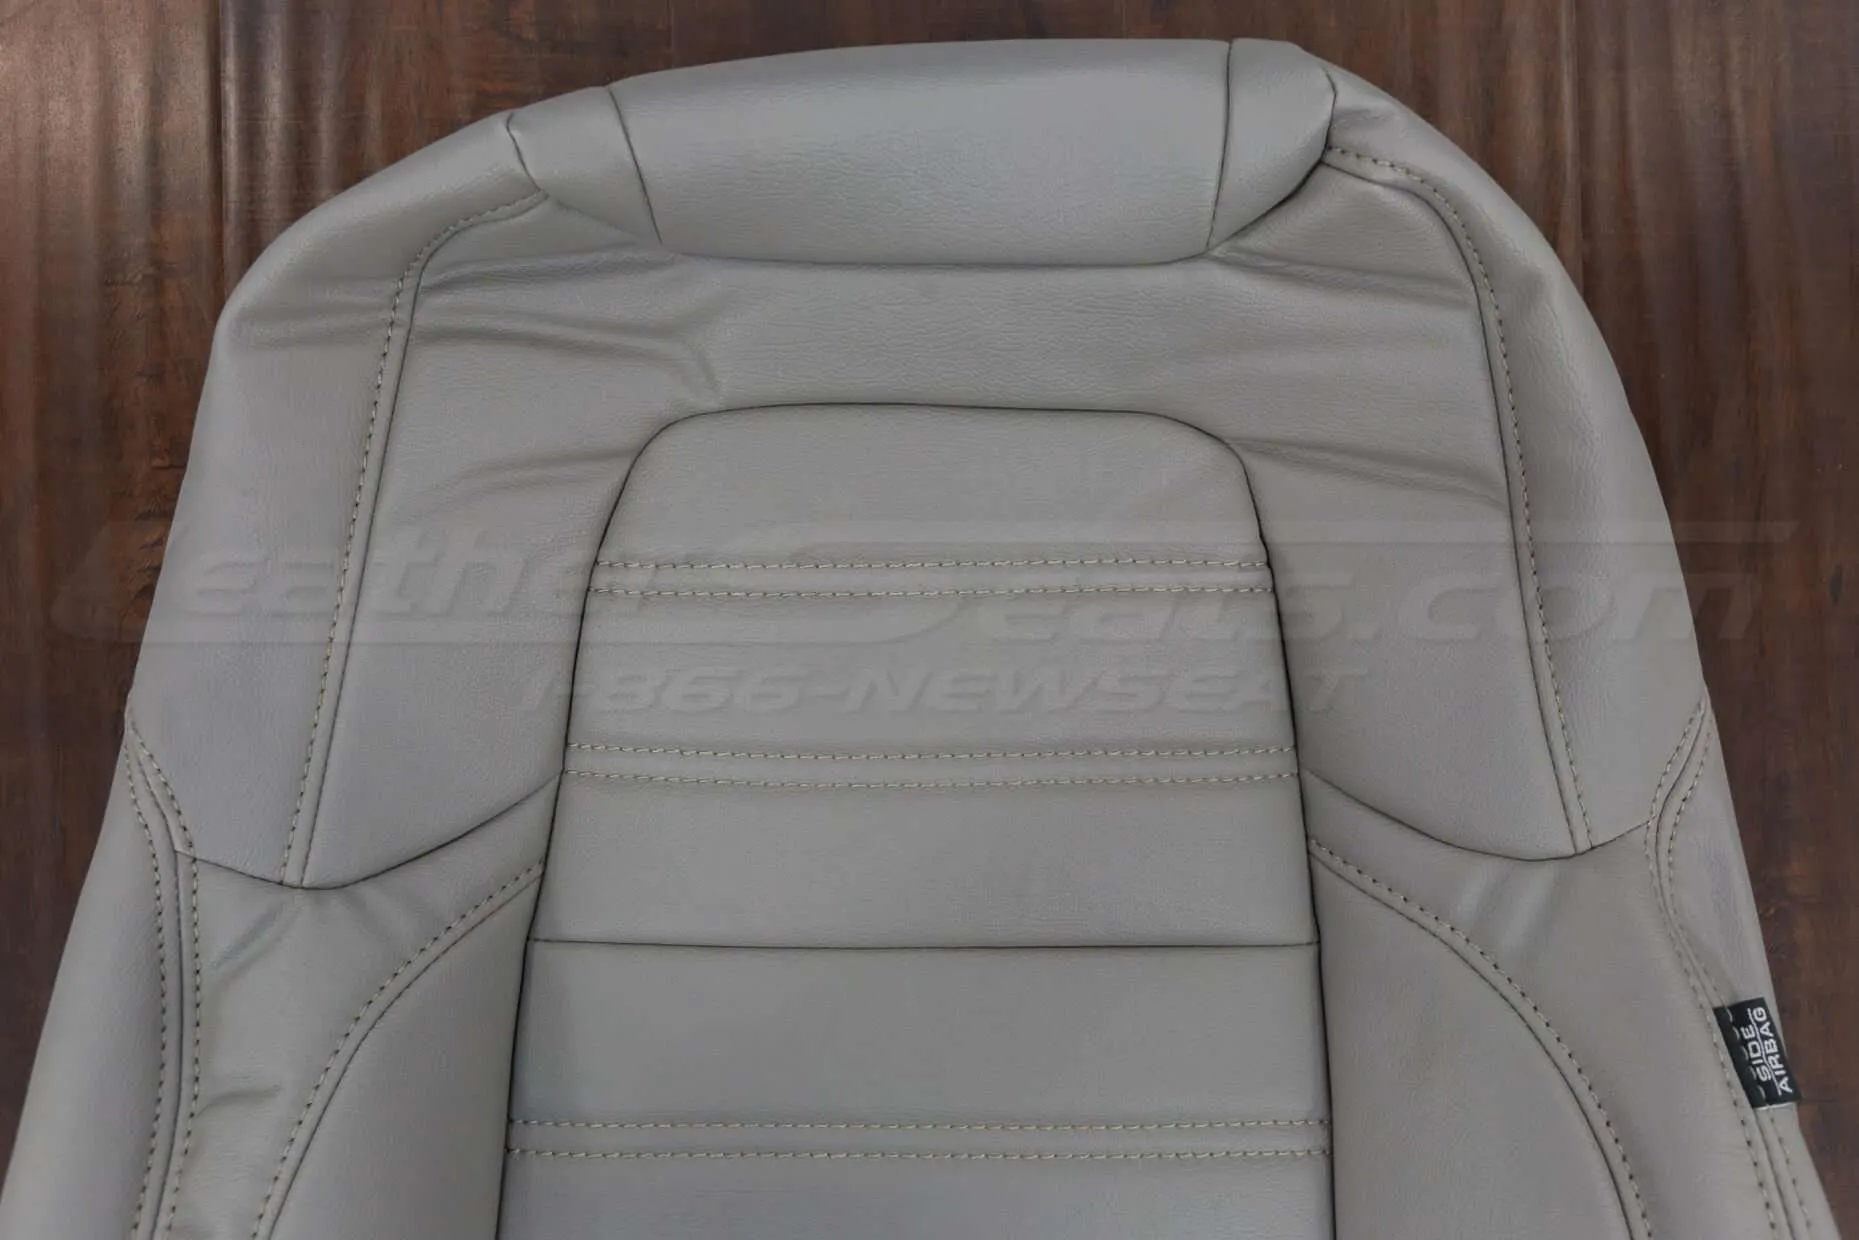 Honda CRV Leather Kit - Ash - Upper section of front backrest